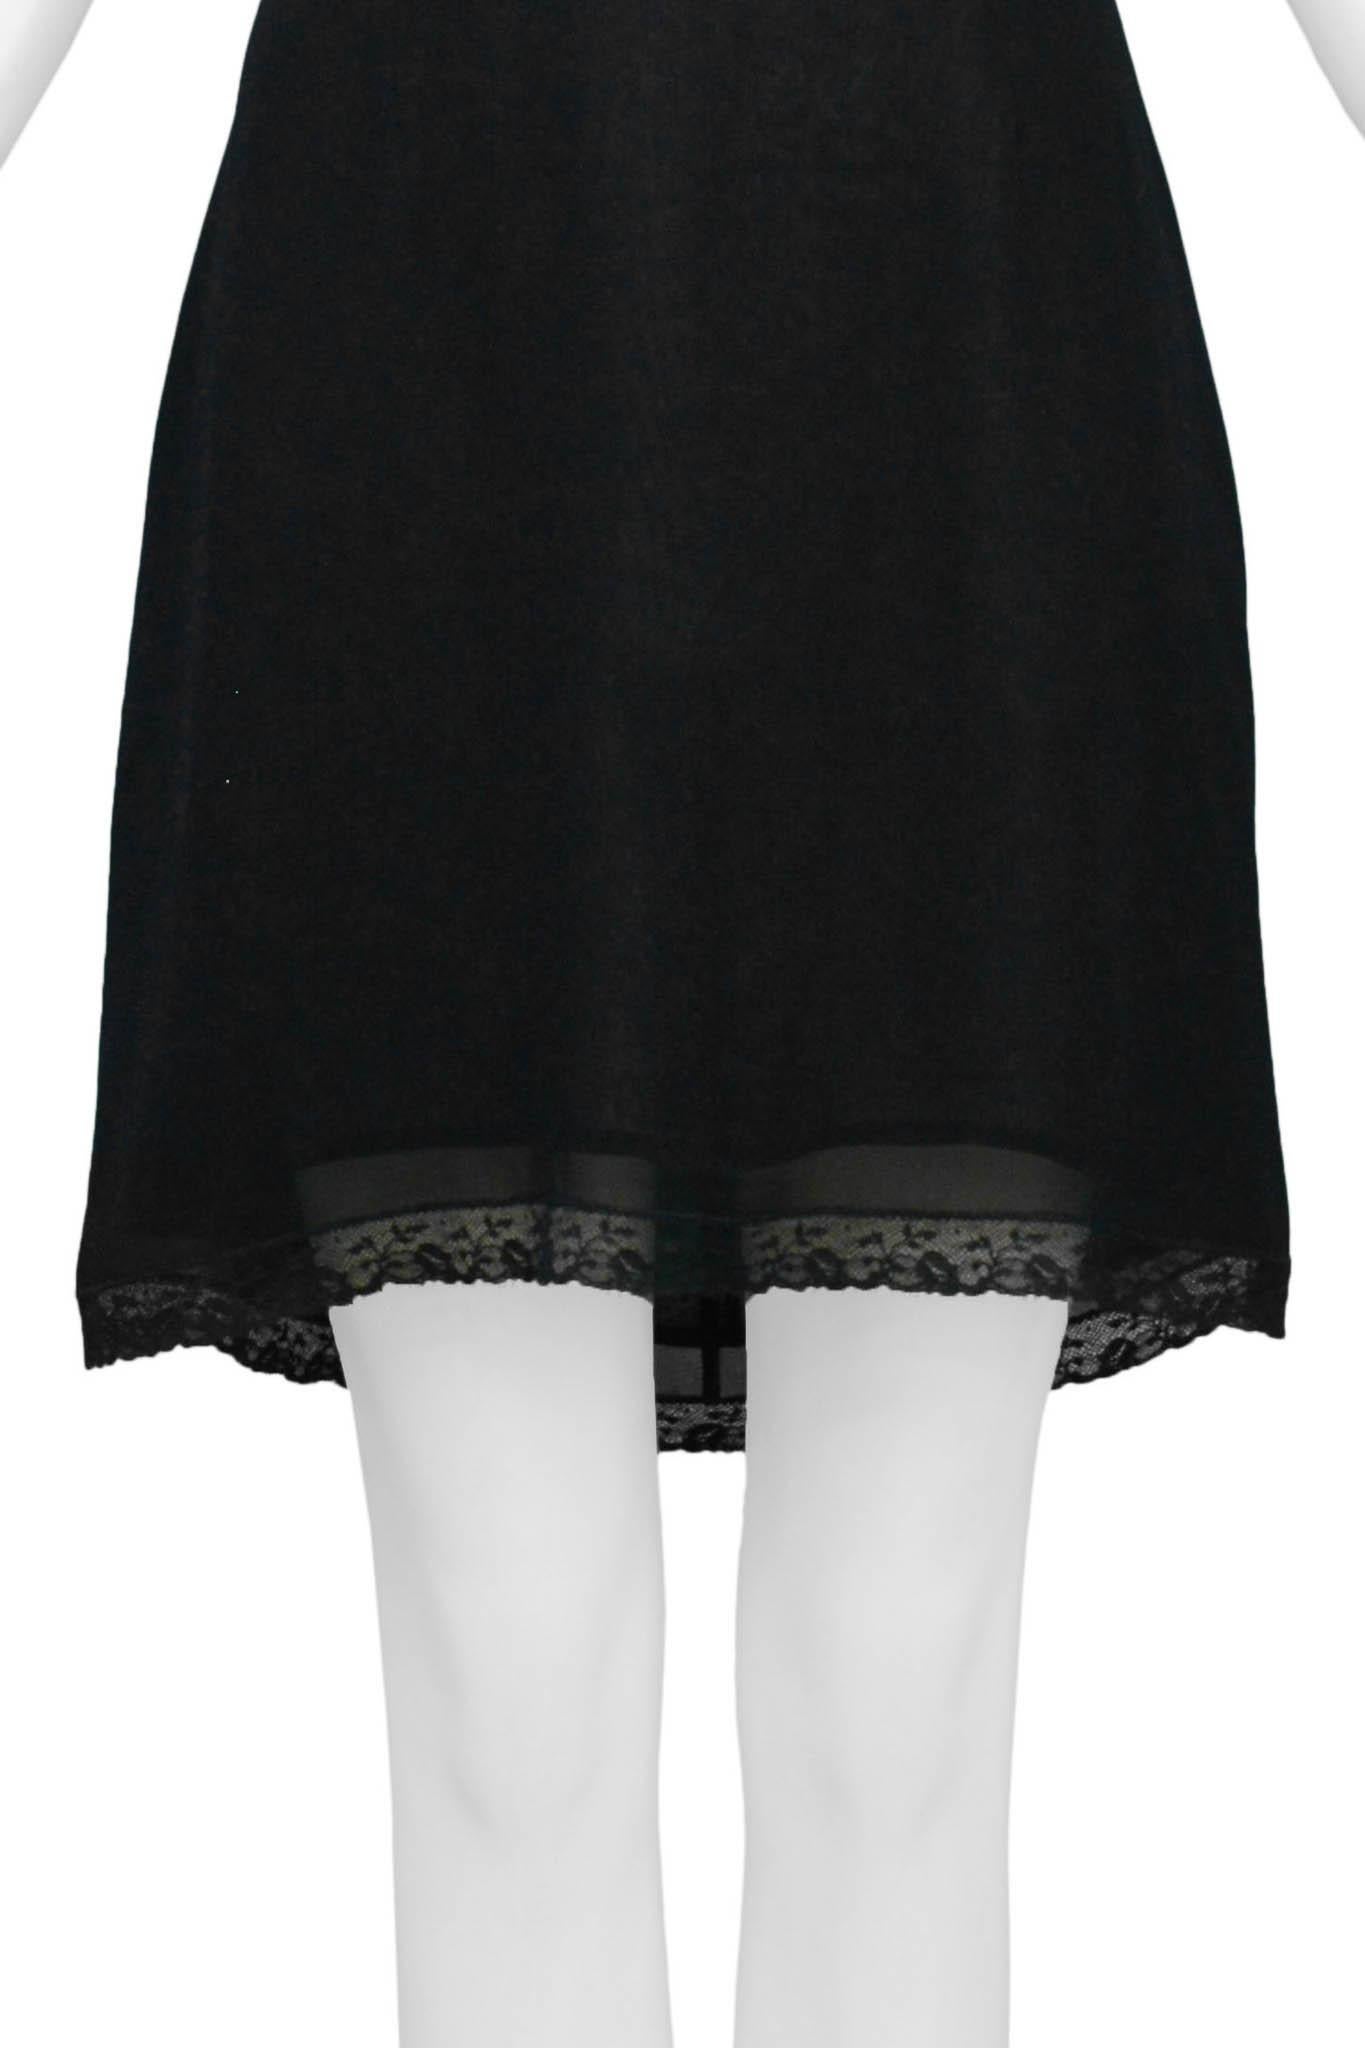 Dolce & Gabbana Black Slip Dress With Lace Trim For Sale 2